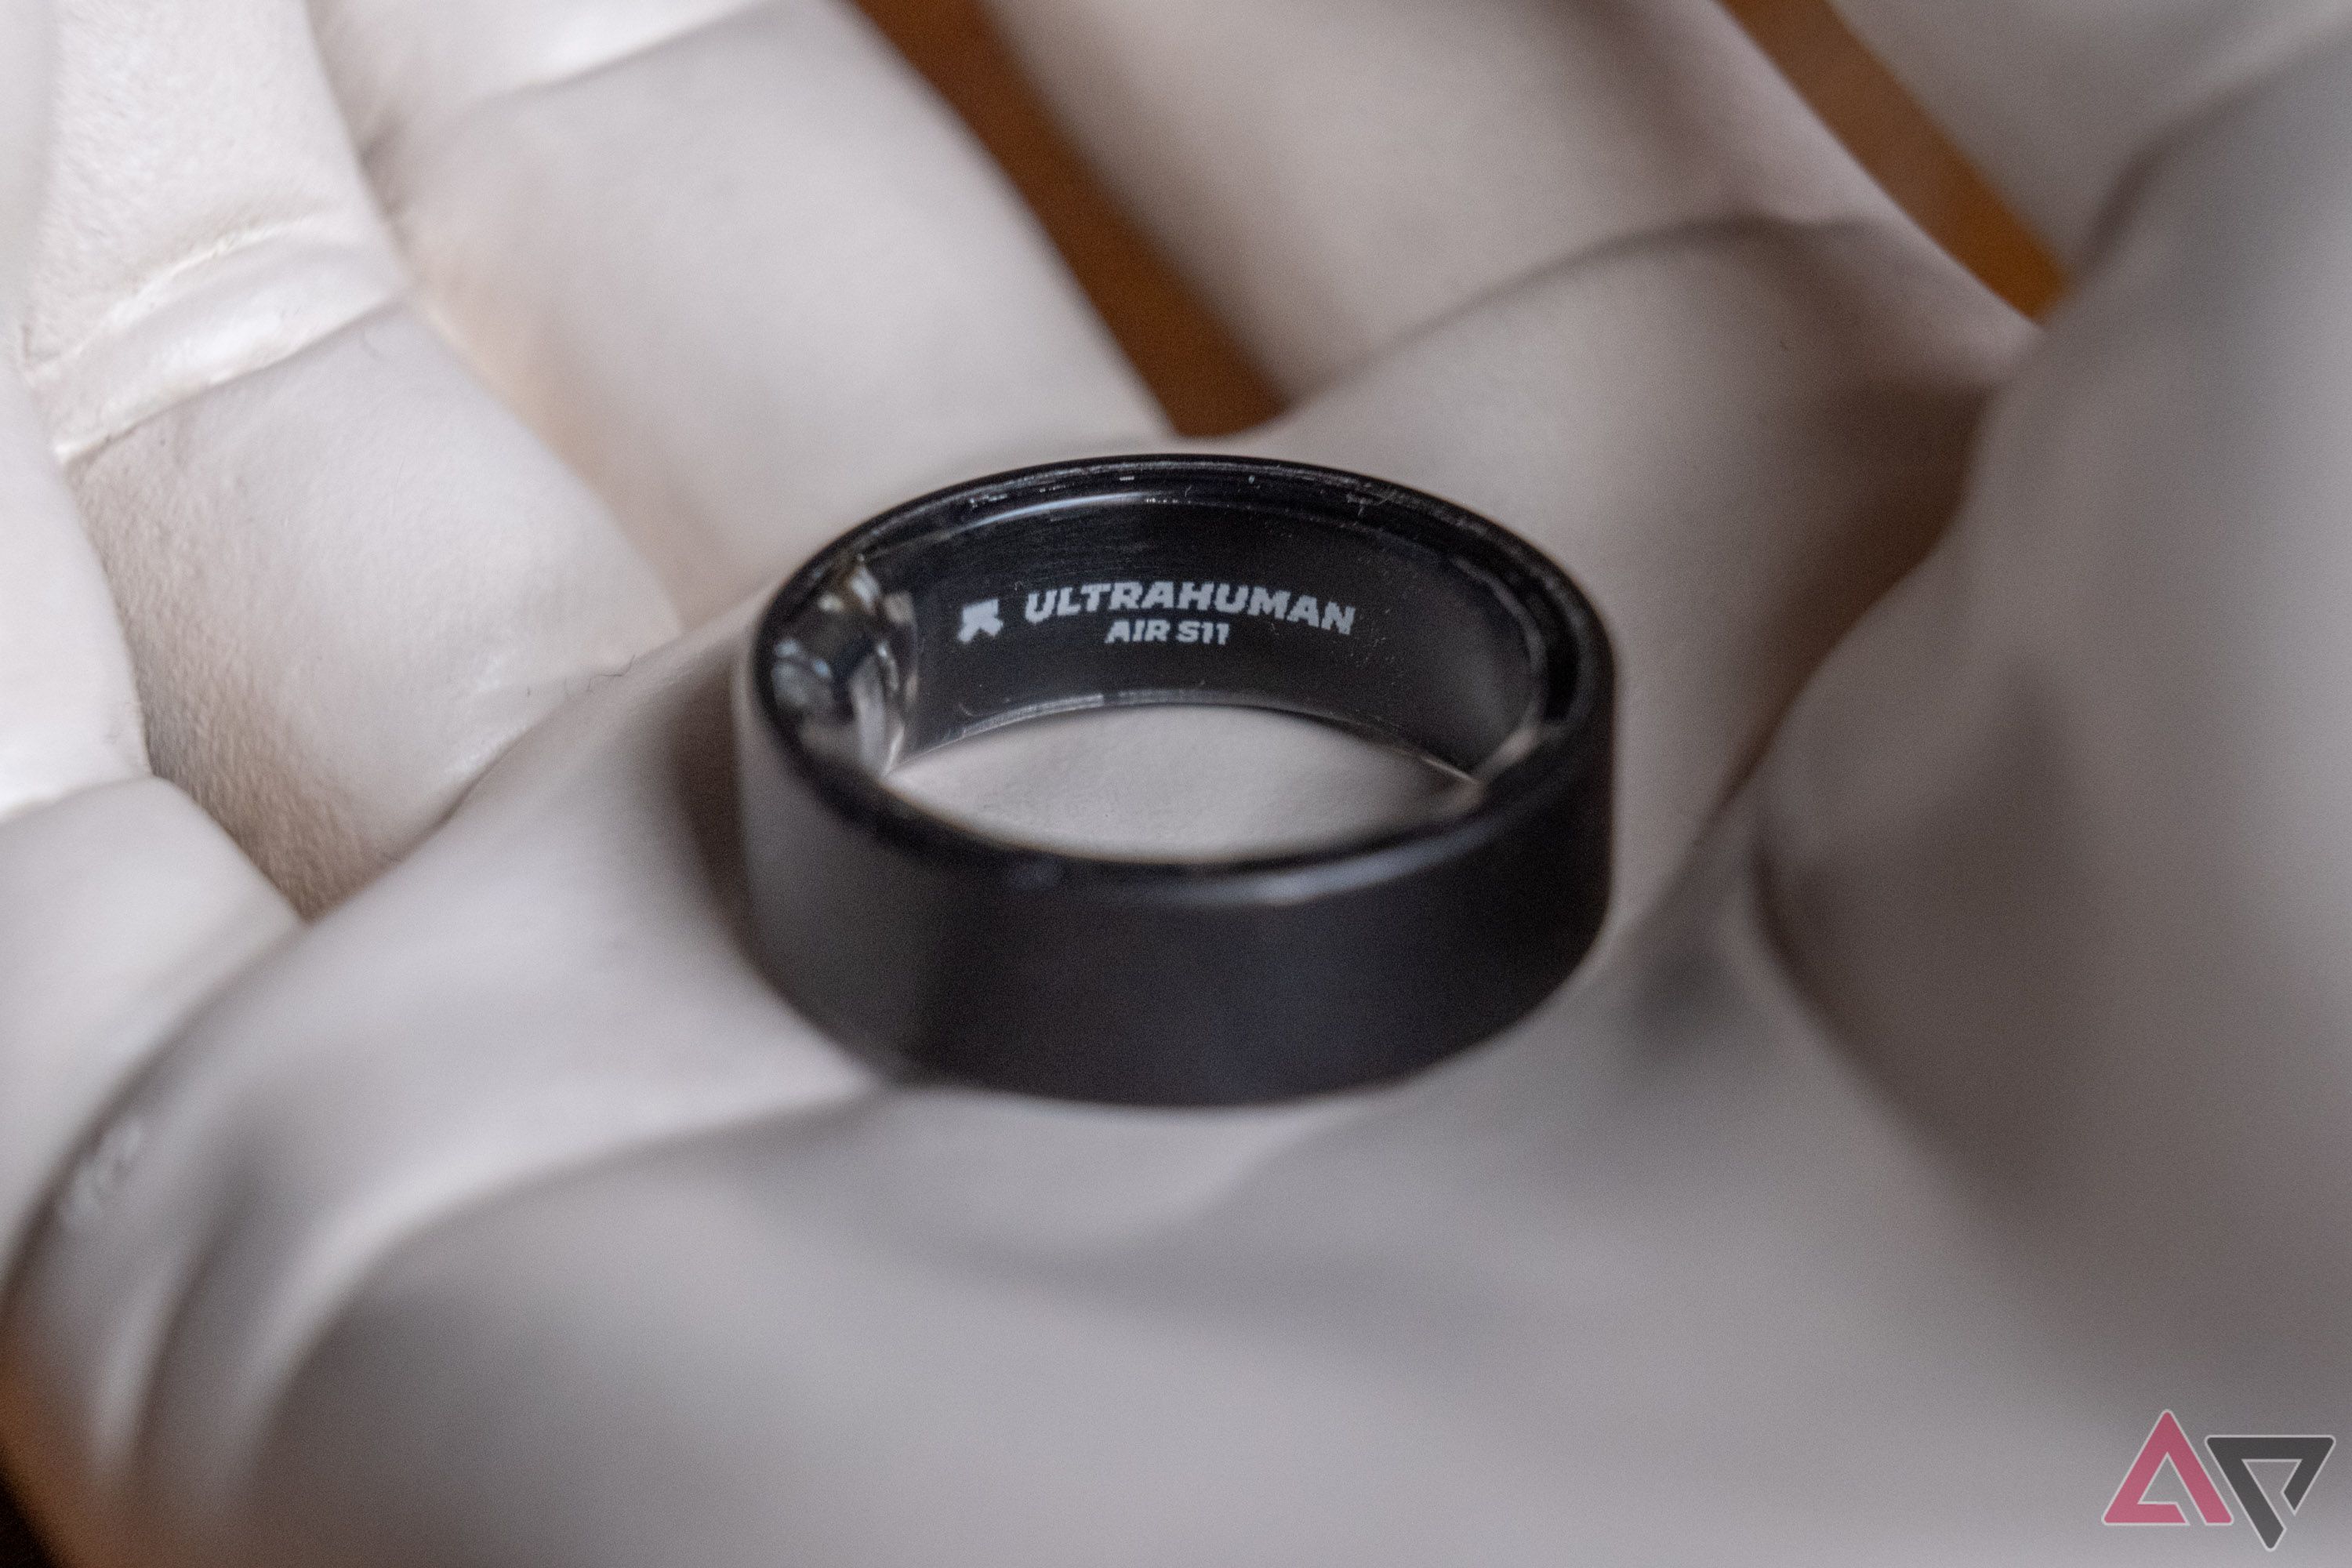 Alternativa al anillo Oura: Ultrahuman Ring Air